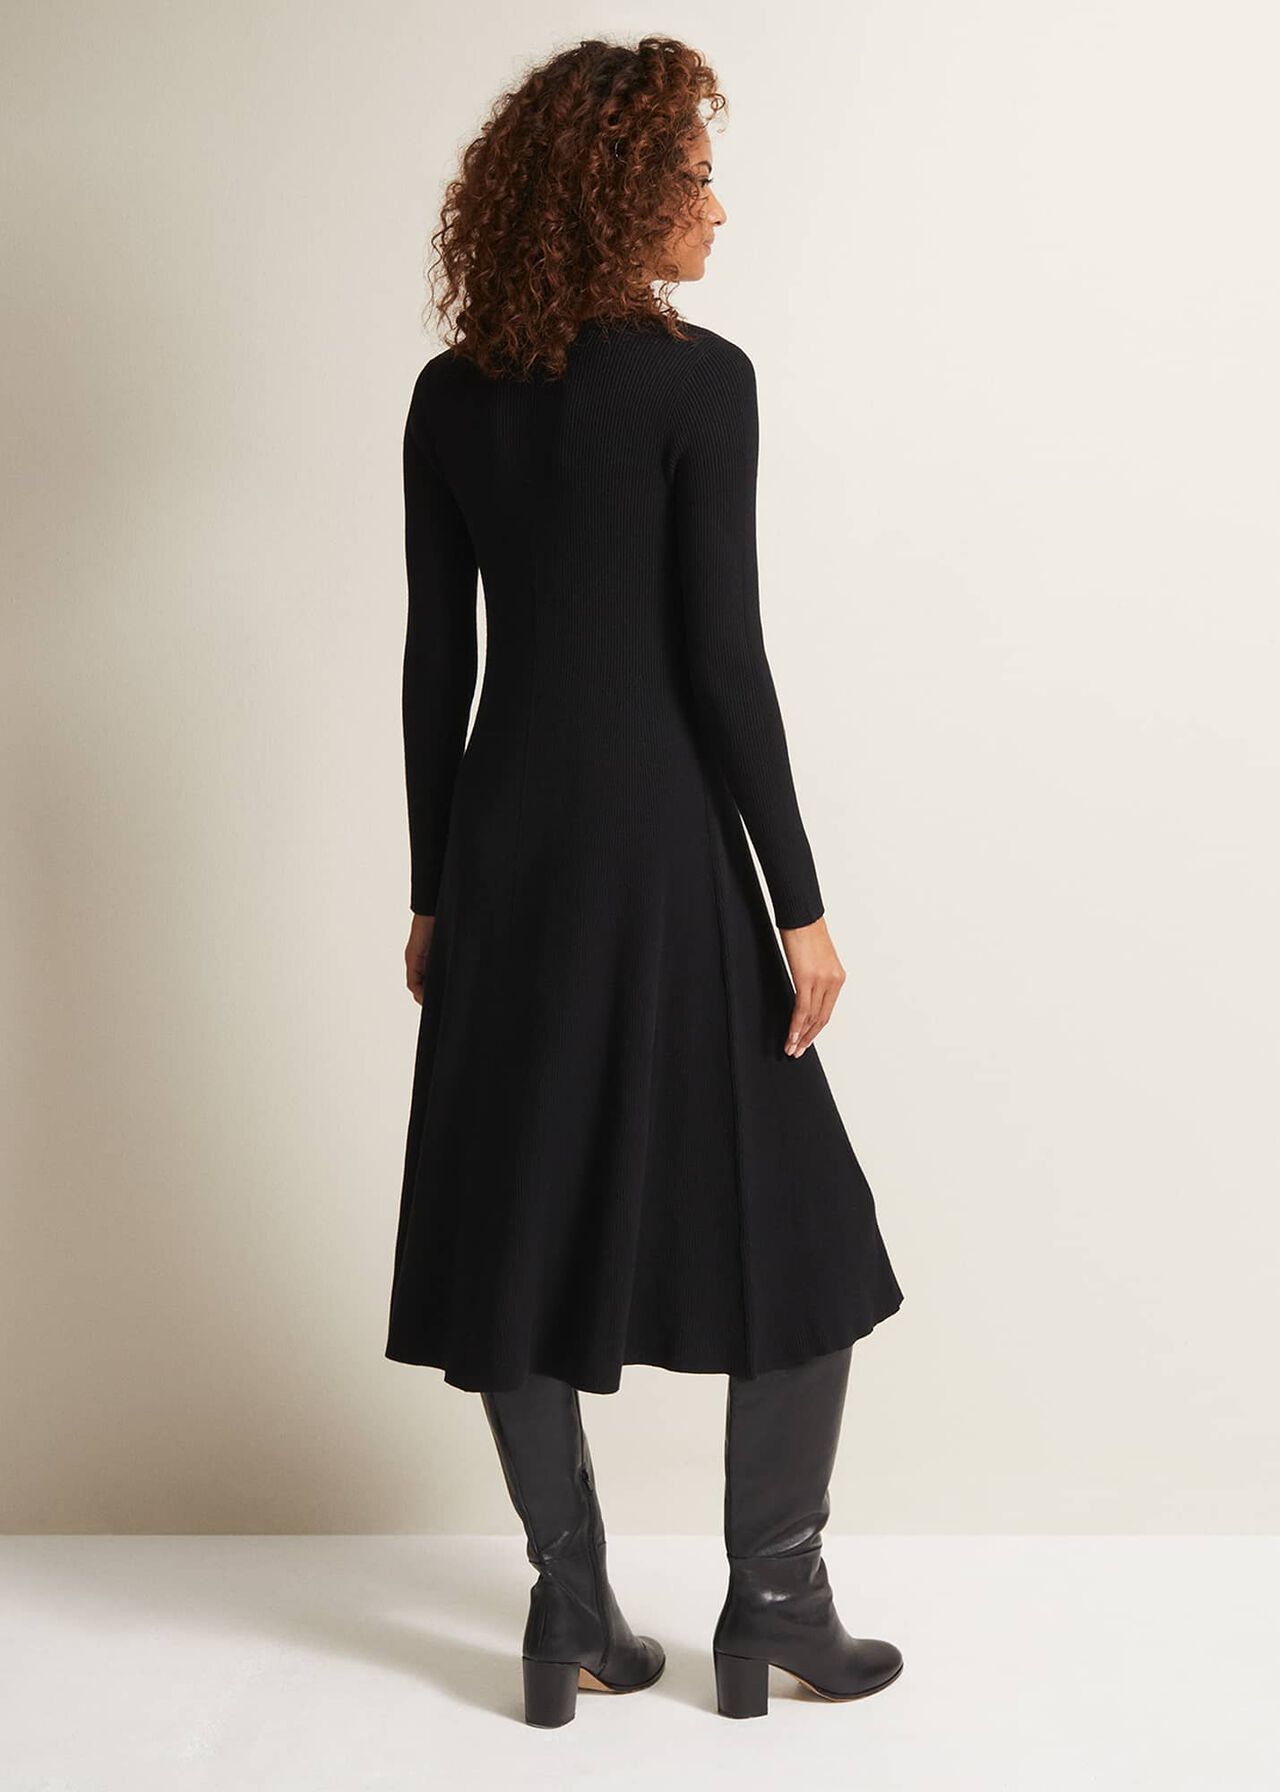 Amberlyn Black Fit And Flare Midi Dress